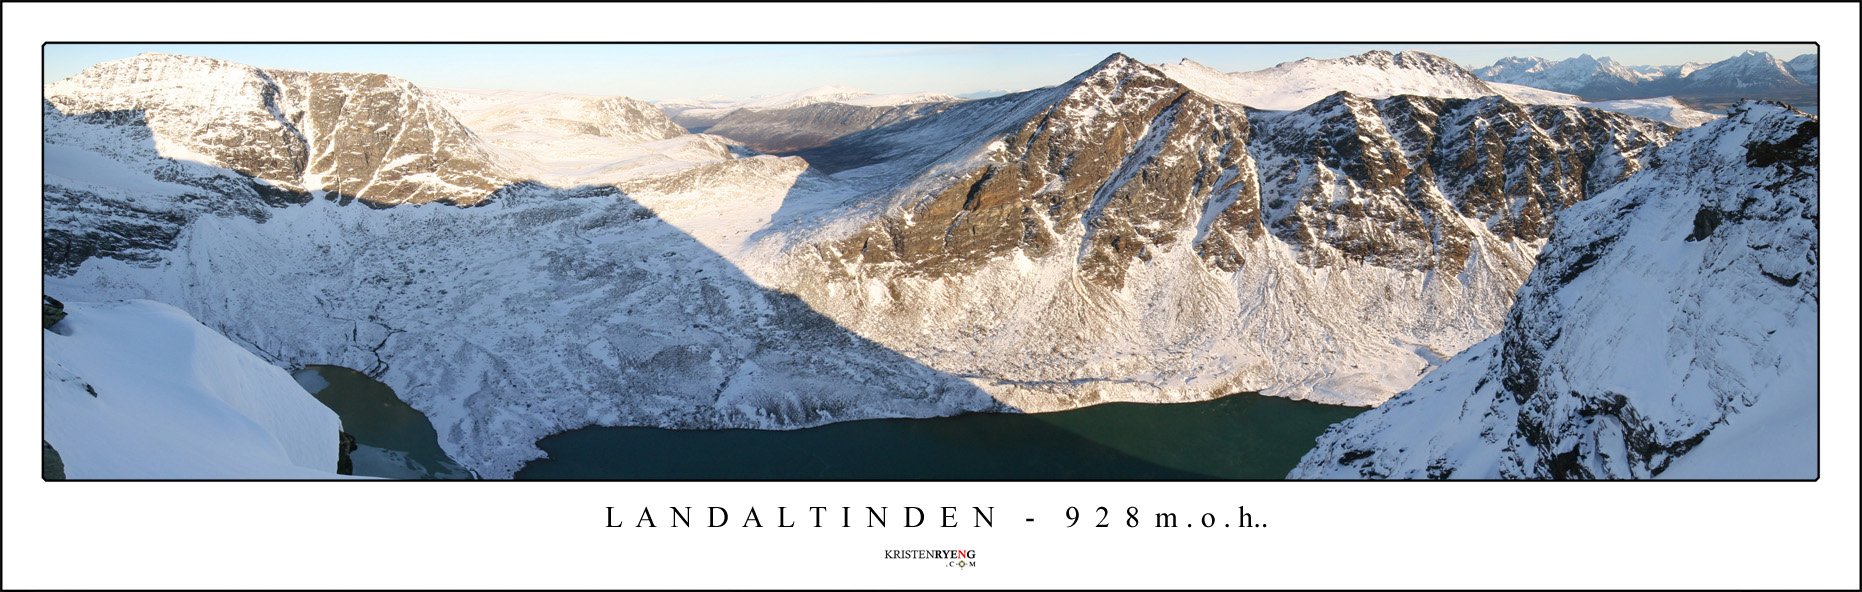 Panorama-Langdaltinden3.jpg - Utsikt fra Langdaltinden (928 moh).